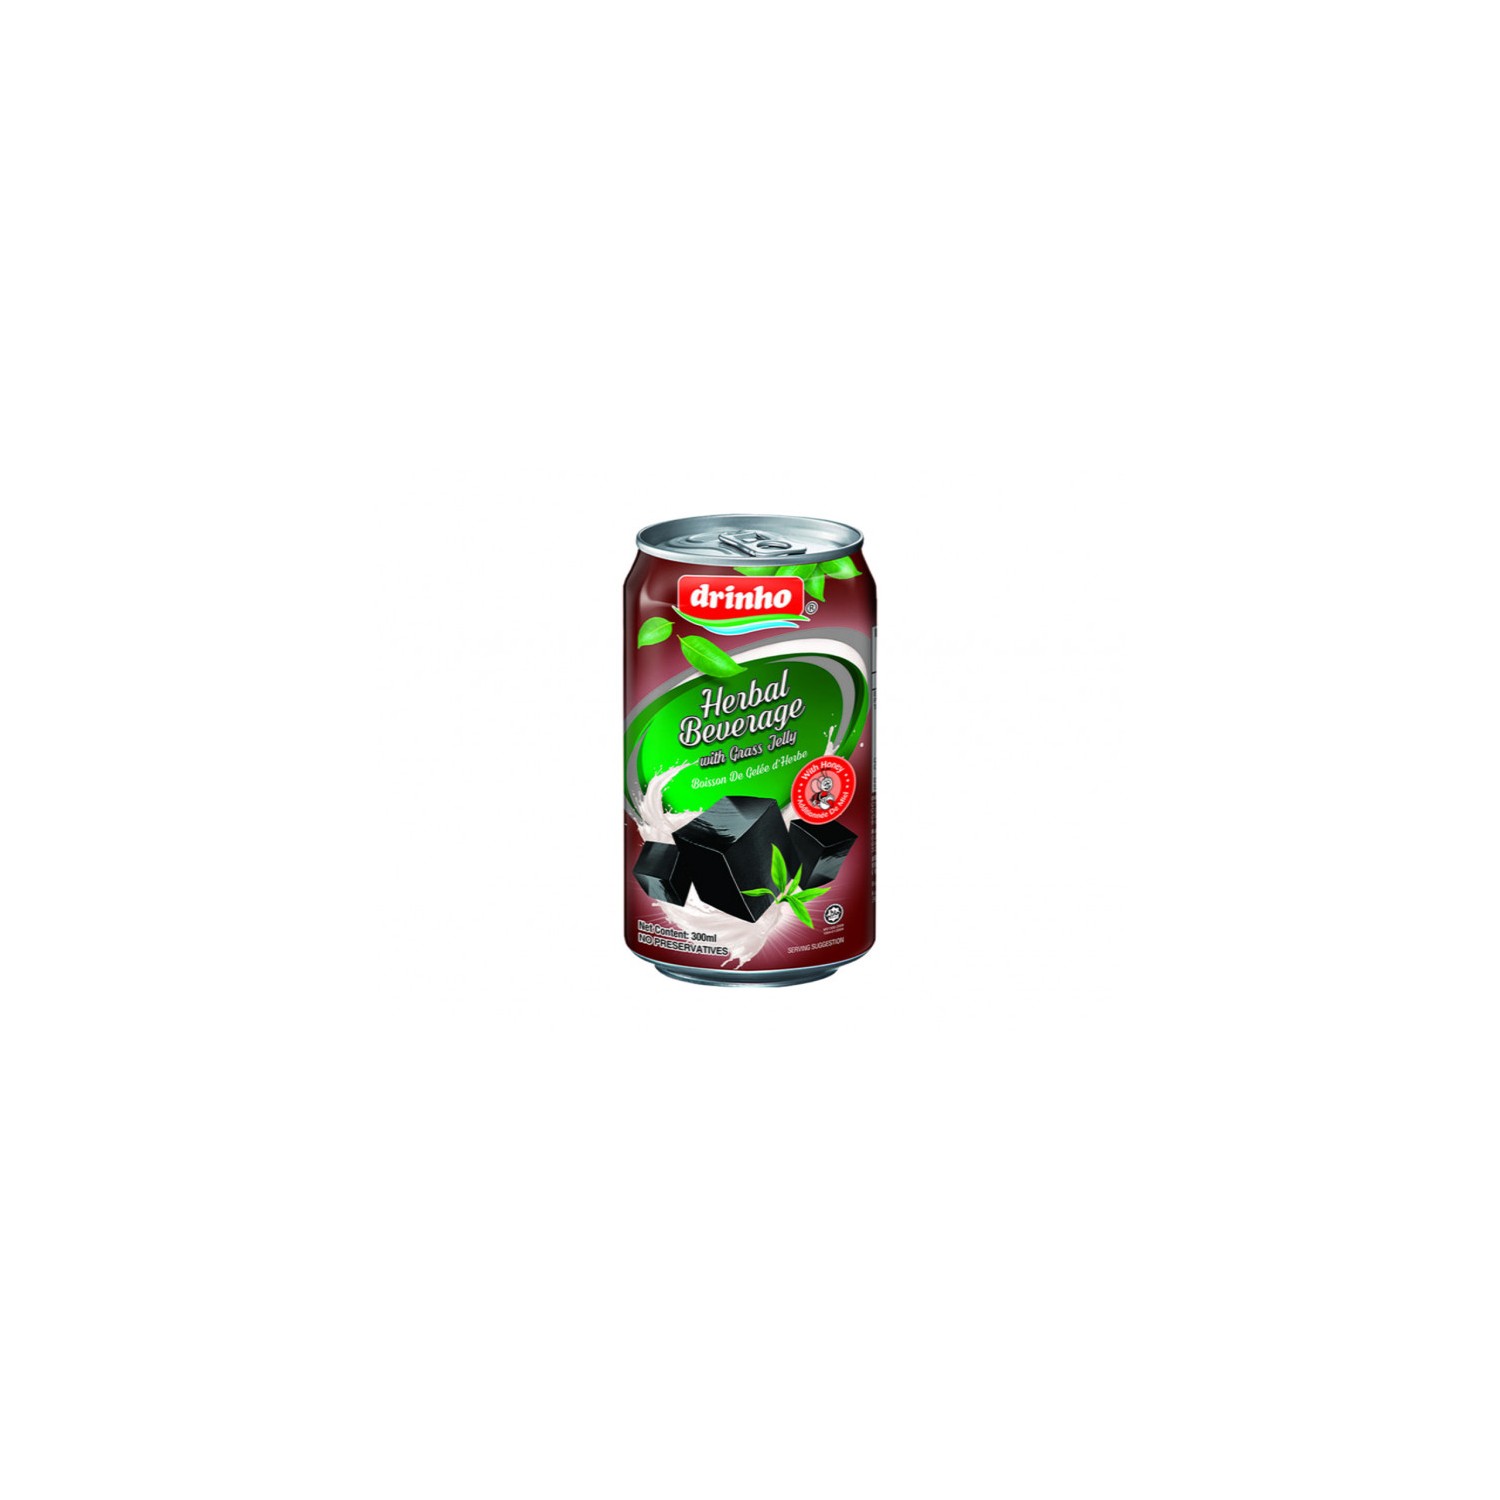 Drinho 300mL Herbal Bverage with Grass Jelly